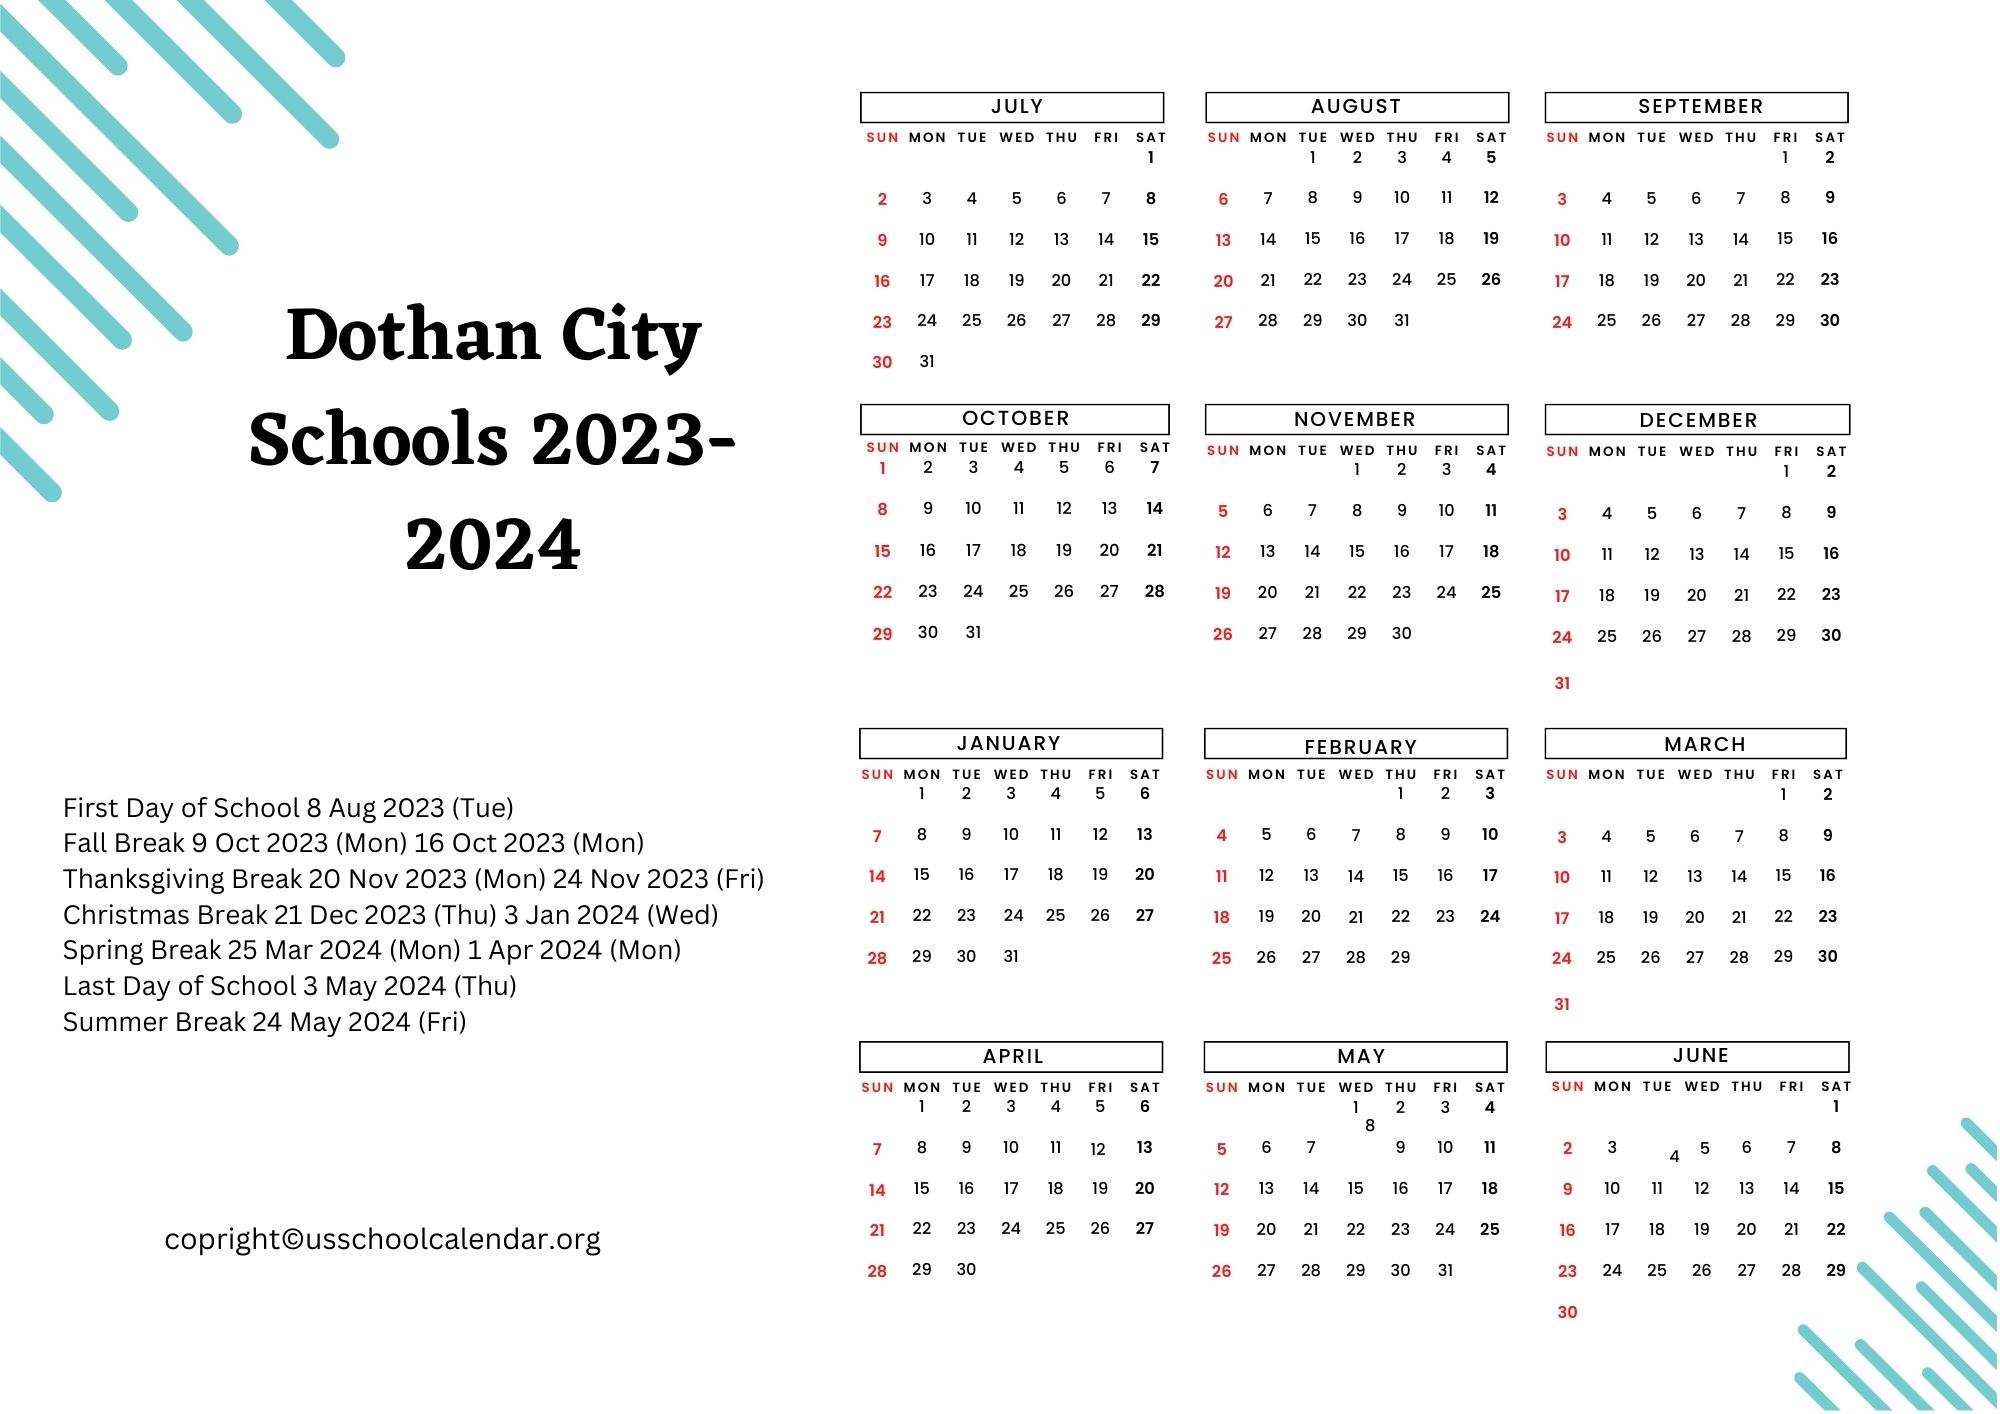 Dothan City Schools Calendar With Holidays 2023 2024